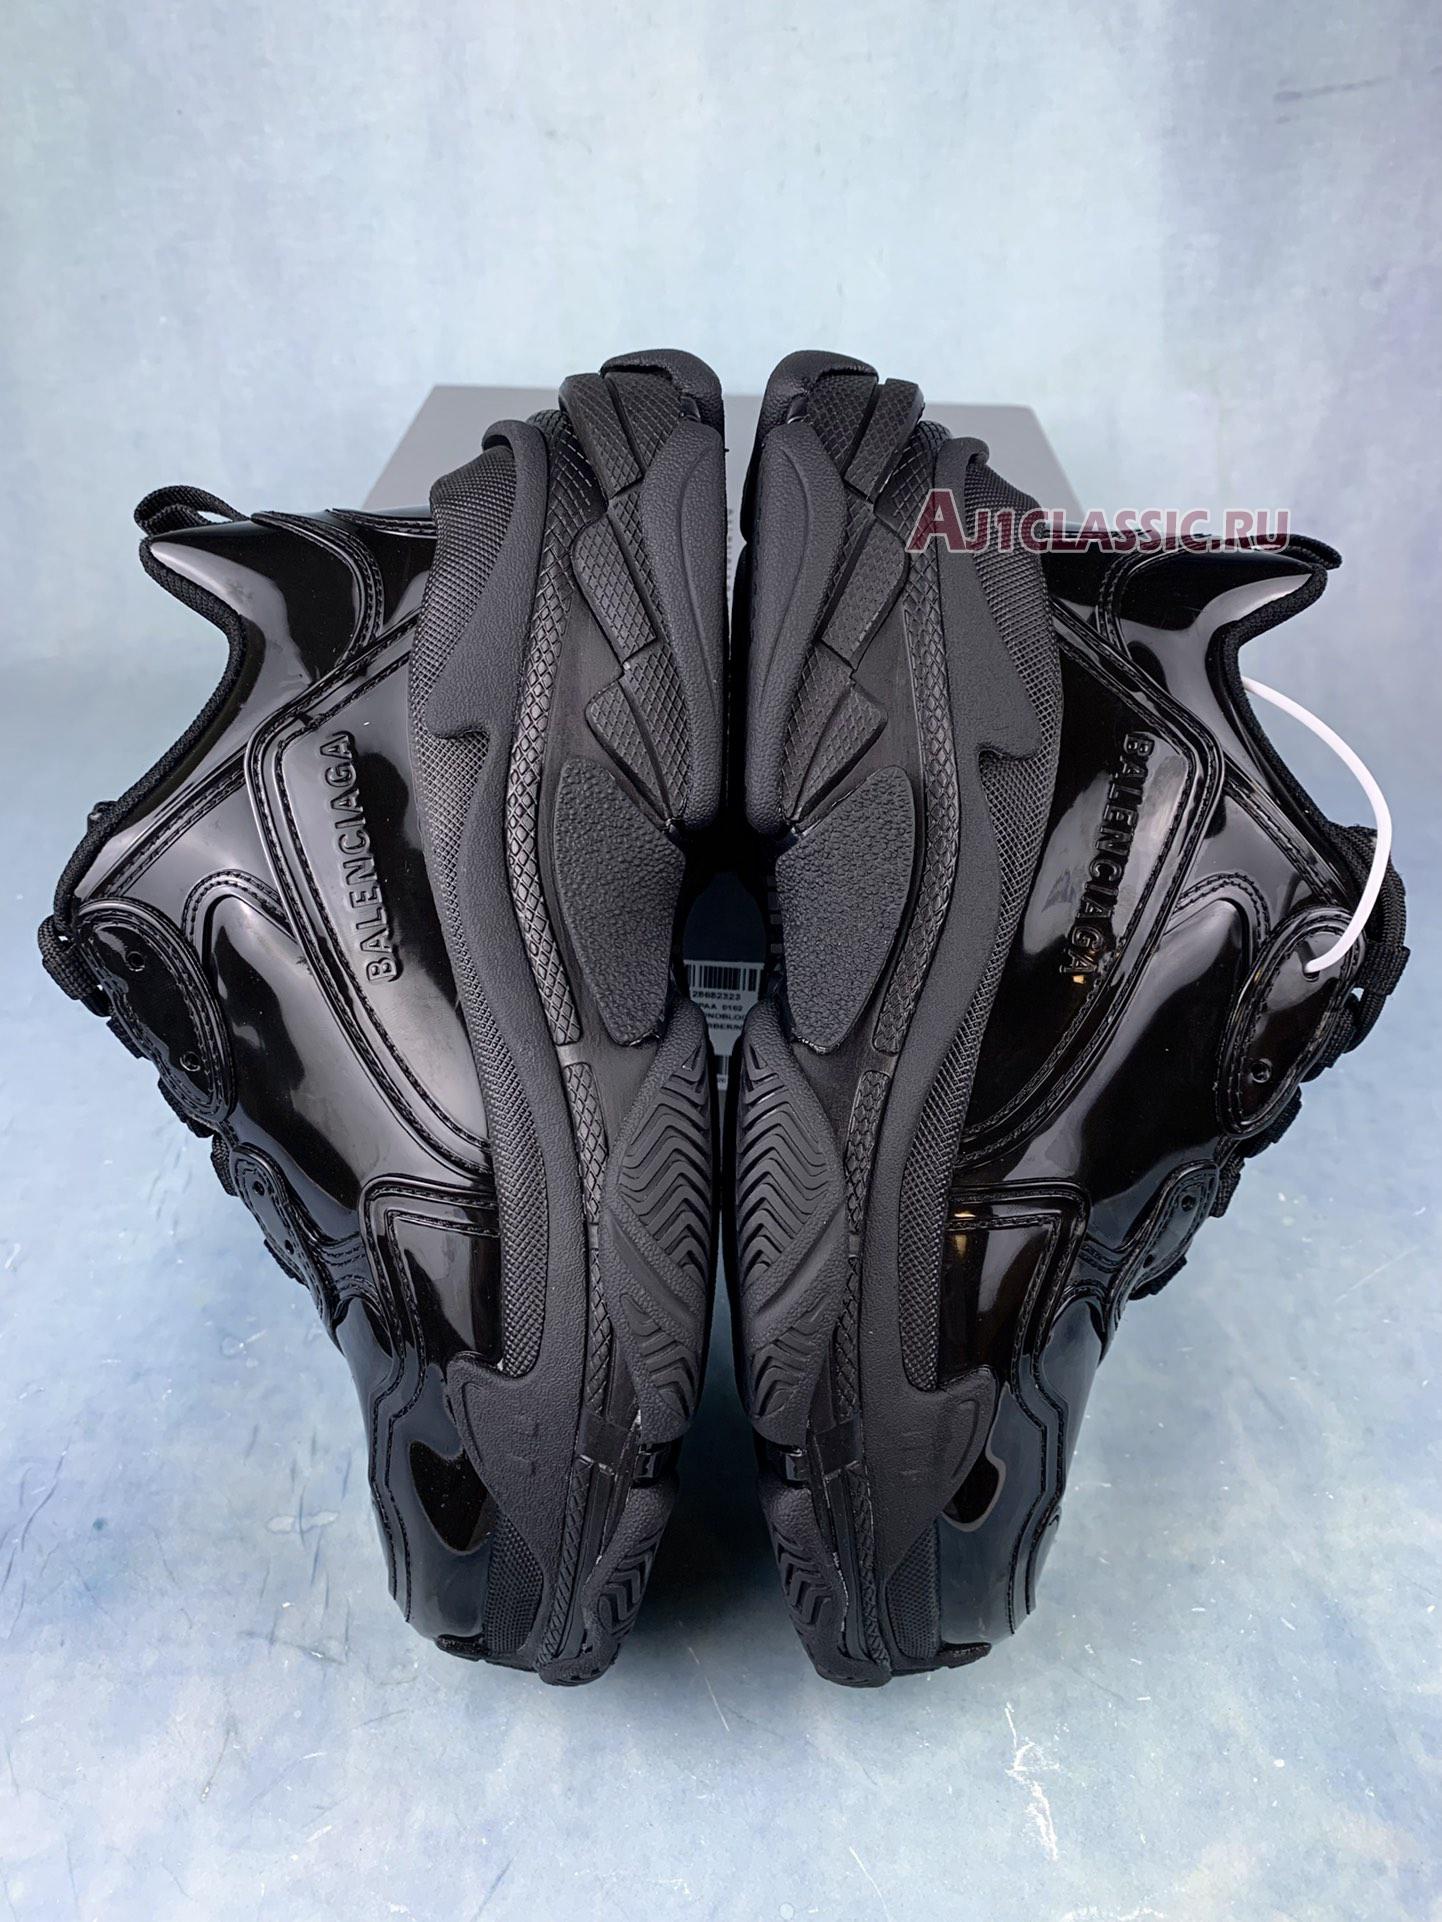 Balenciaga Triple S Sneakers "All Black" 734953 W2PAA 1000